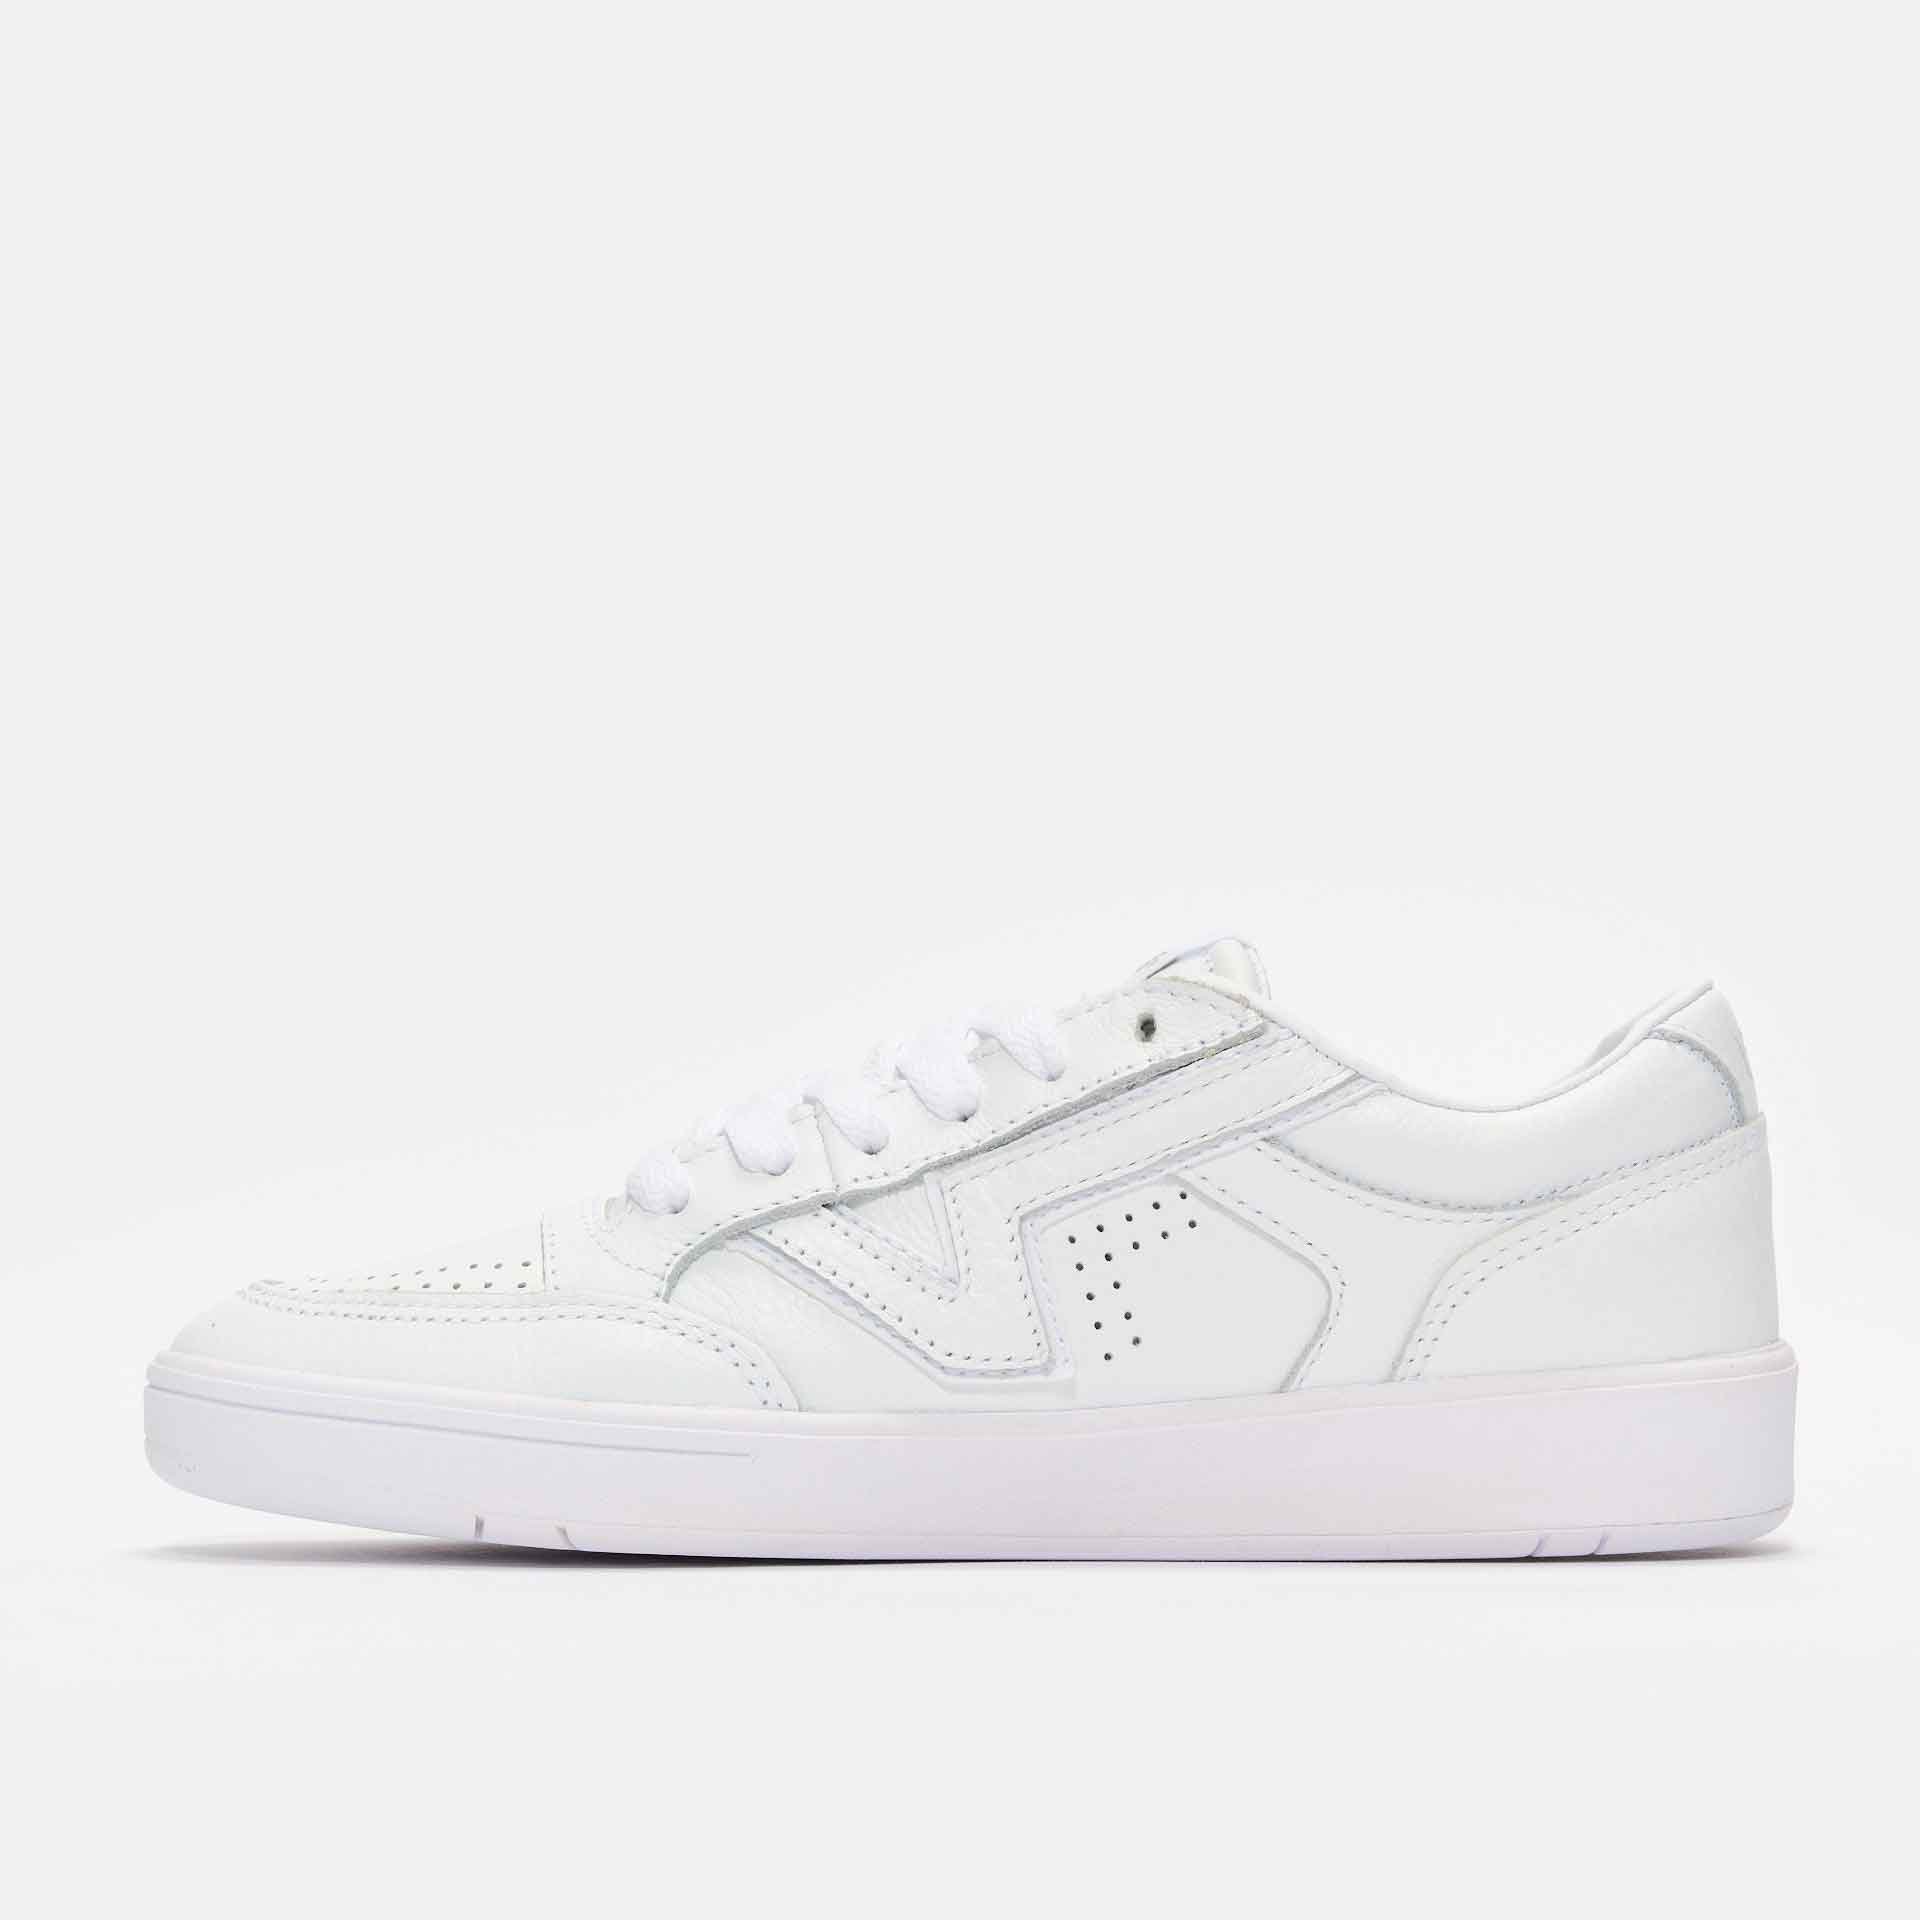 Vans Lowland Sneaker True White/True White